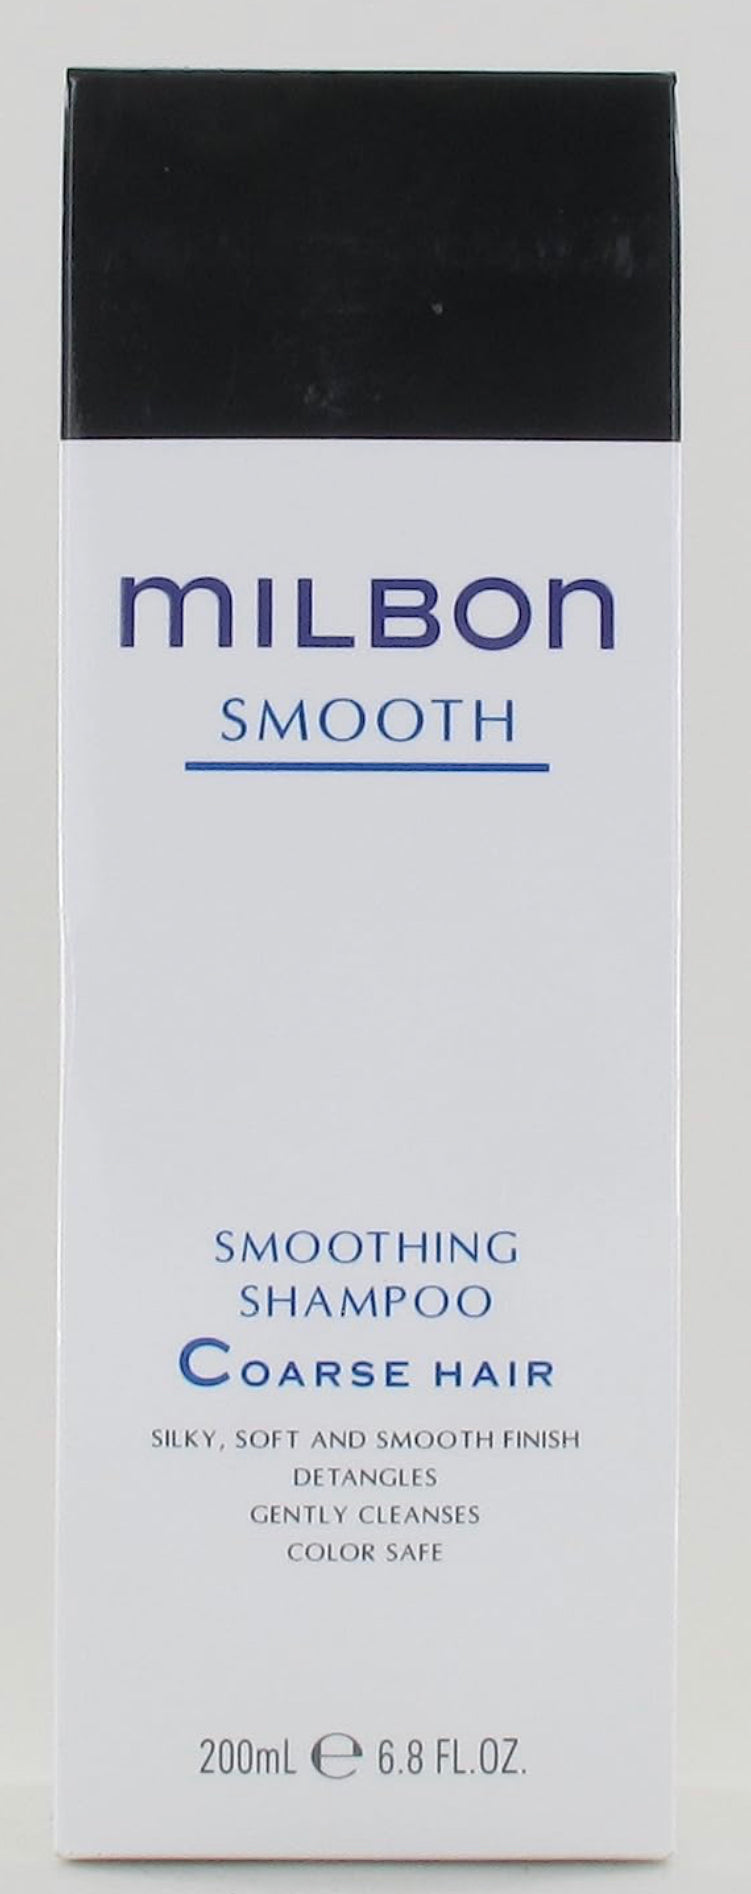 Milbon Smooth Smoothing Shampoo Coarse Hair